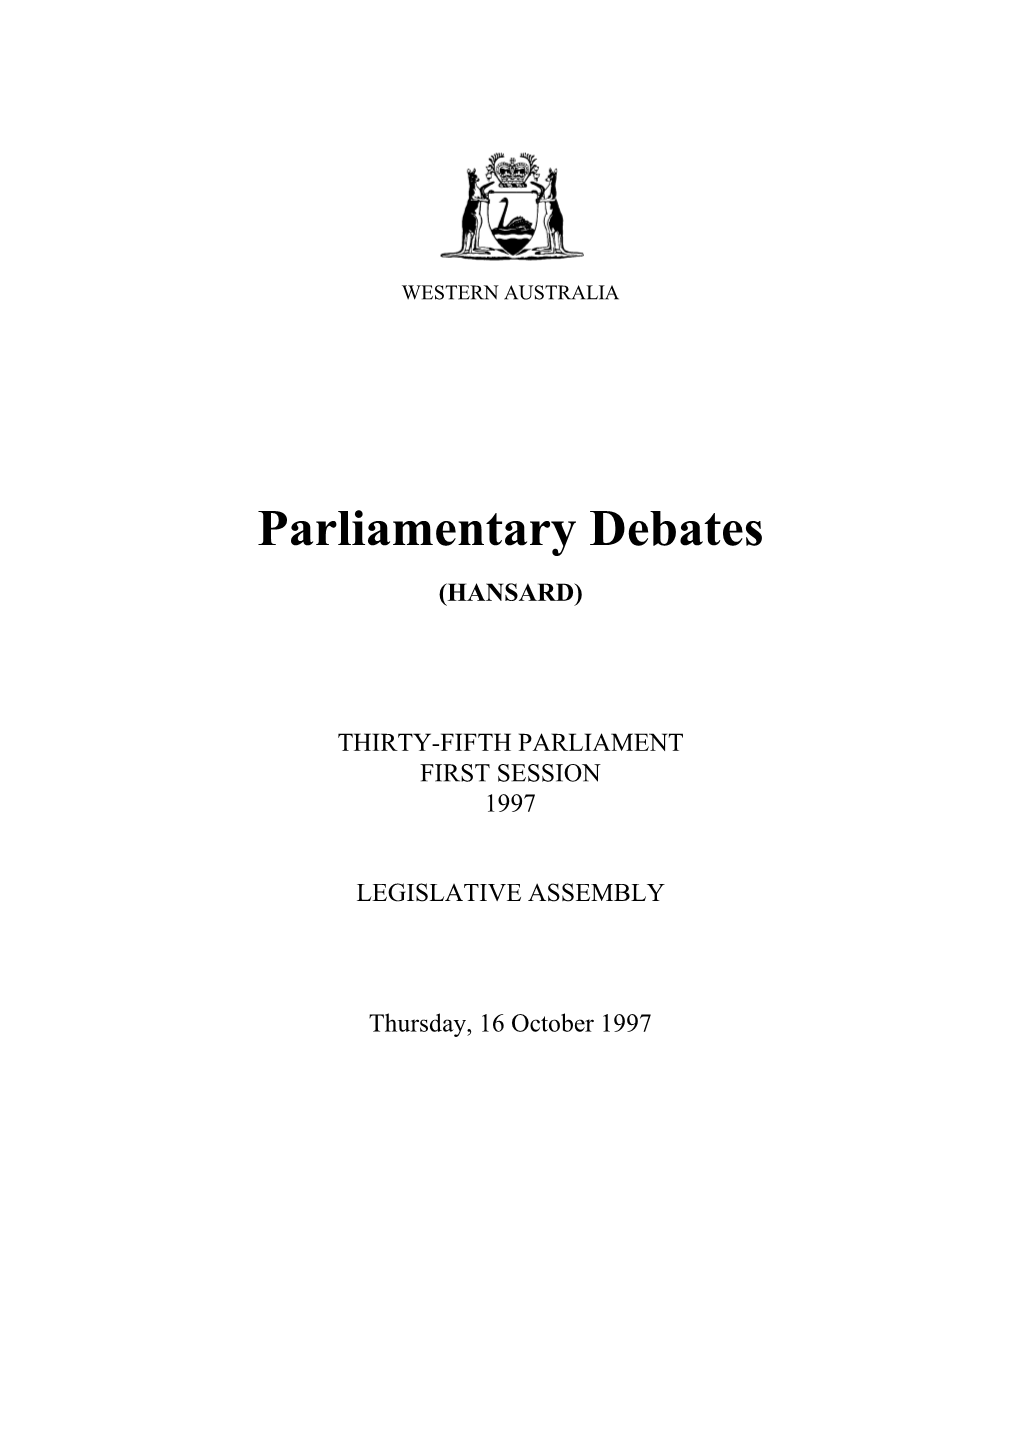 Assembly Thursday, 16 October 1997